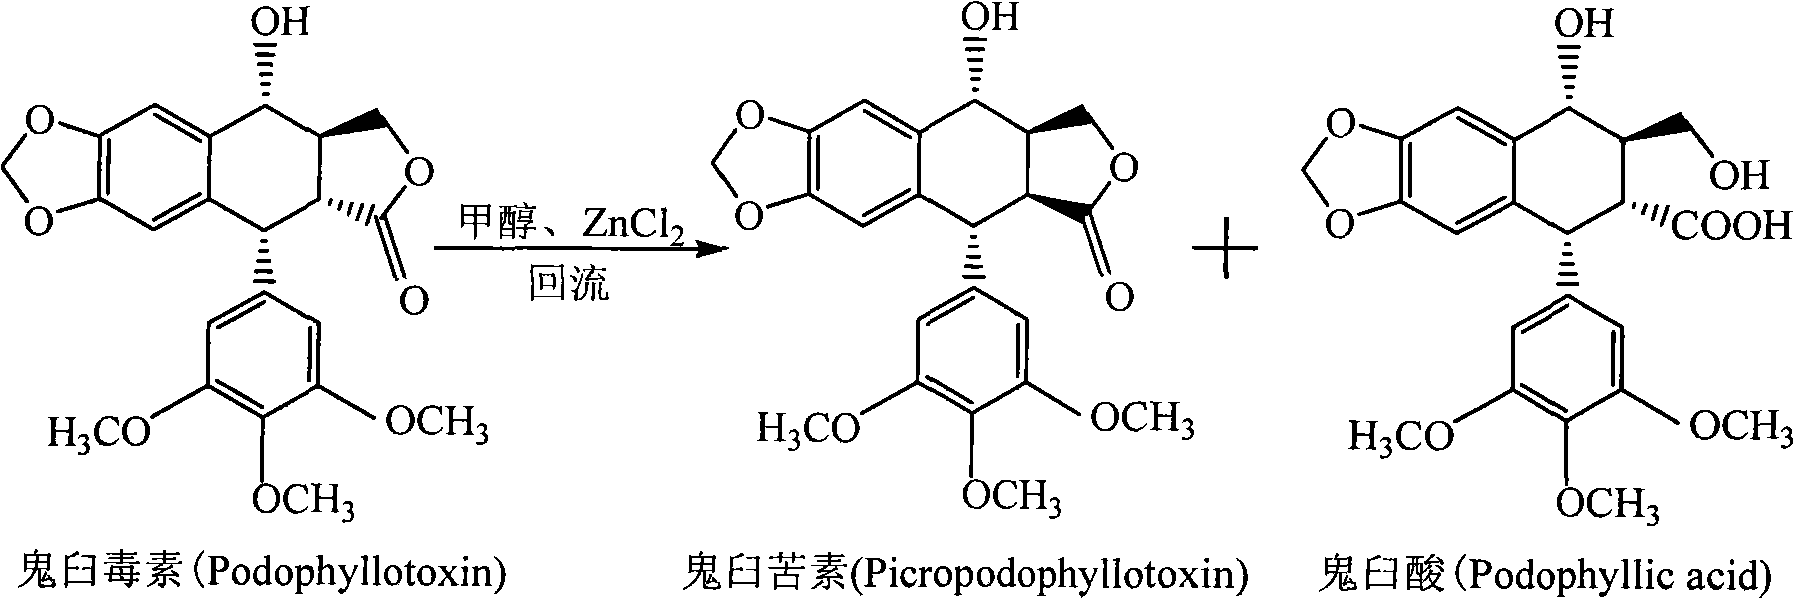 Method for converting podophyllinic acid lactone into podophyllic acid and picropodophyllin